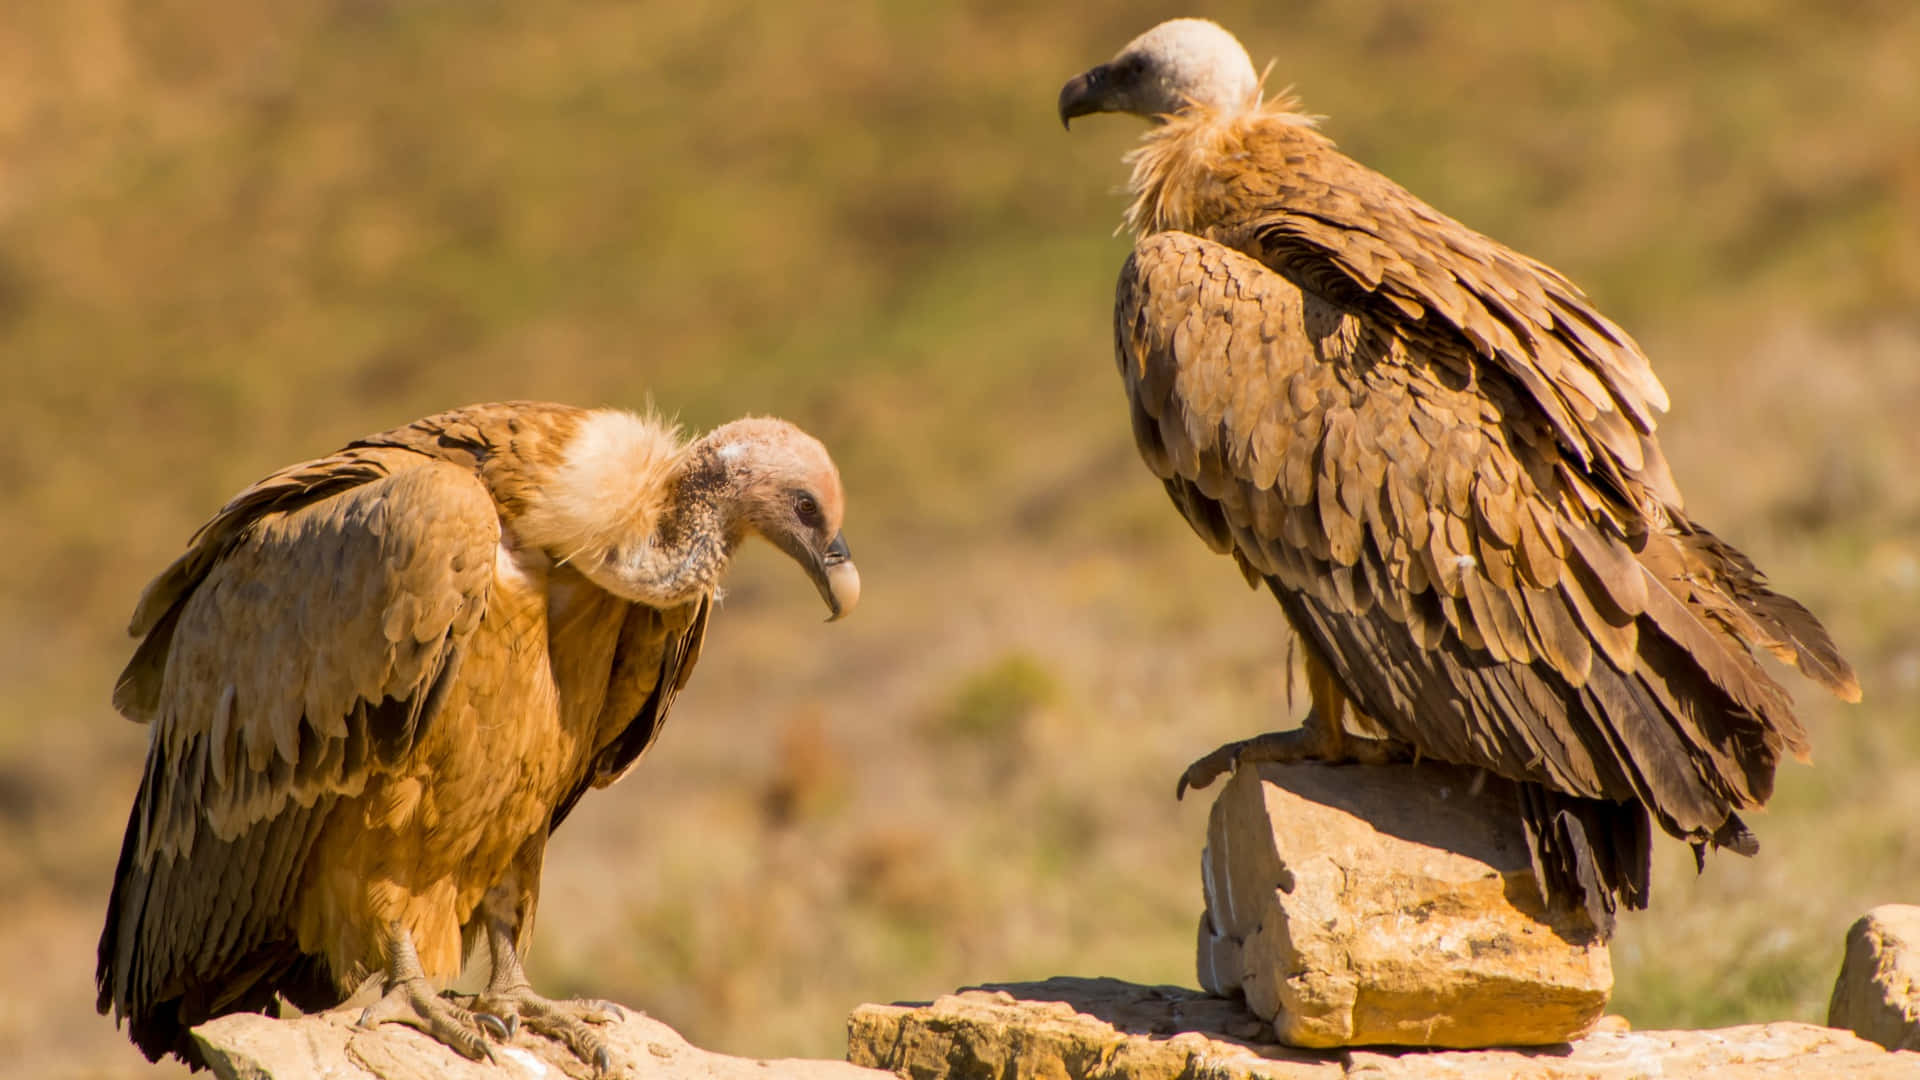 Two Vultures Perchedon Rock Wallpaper